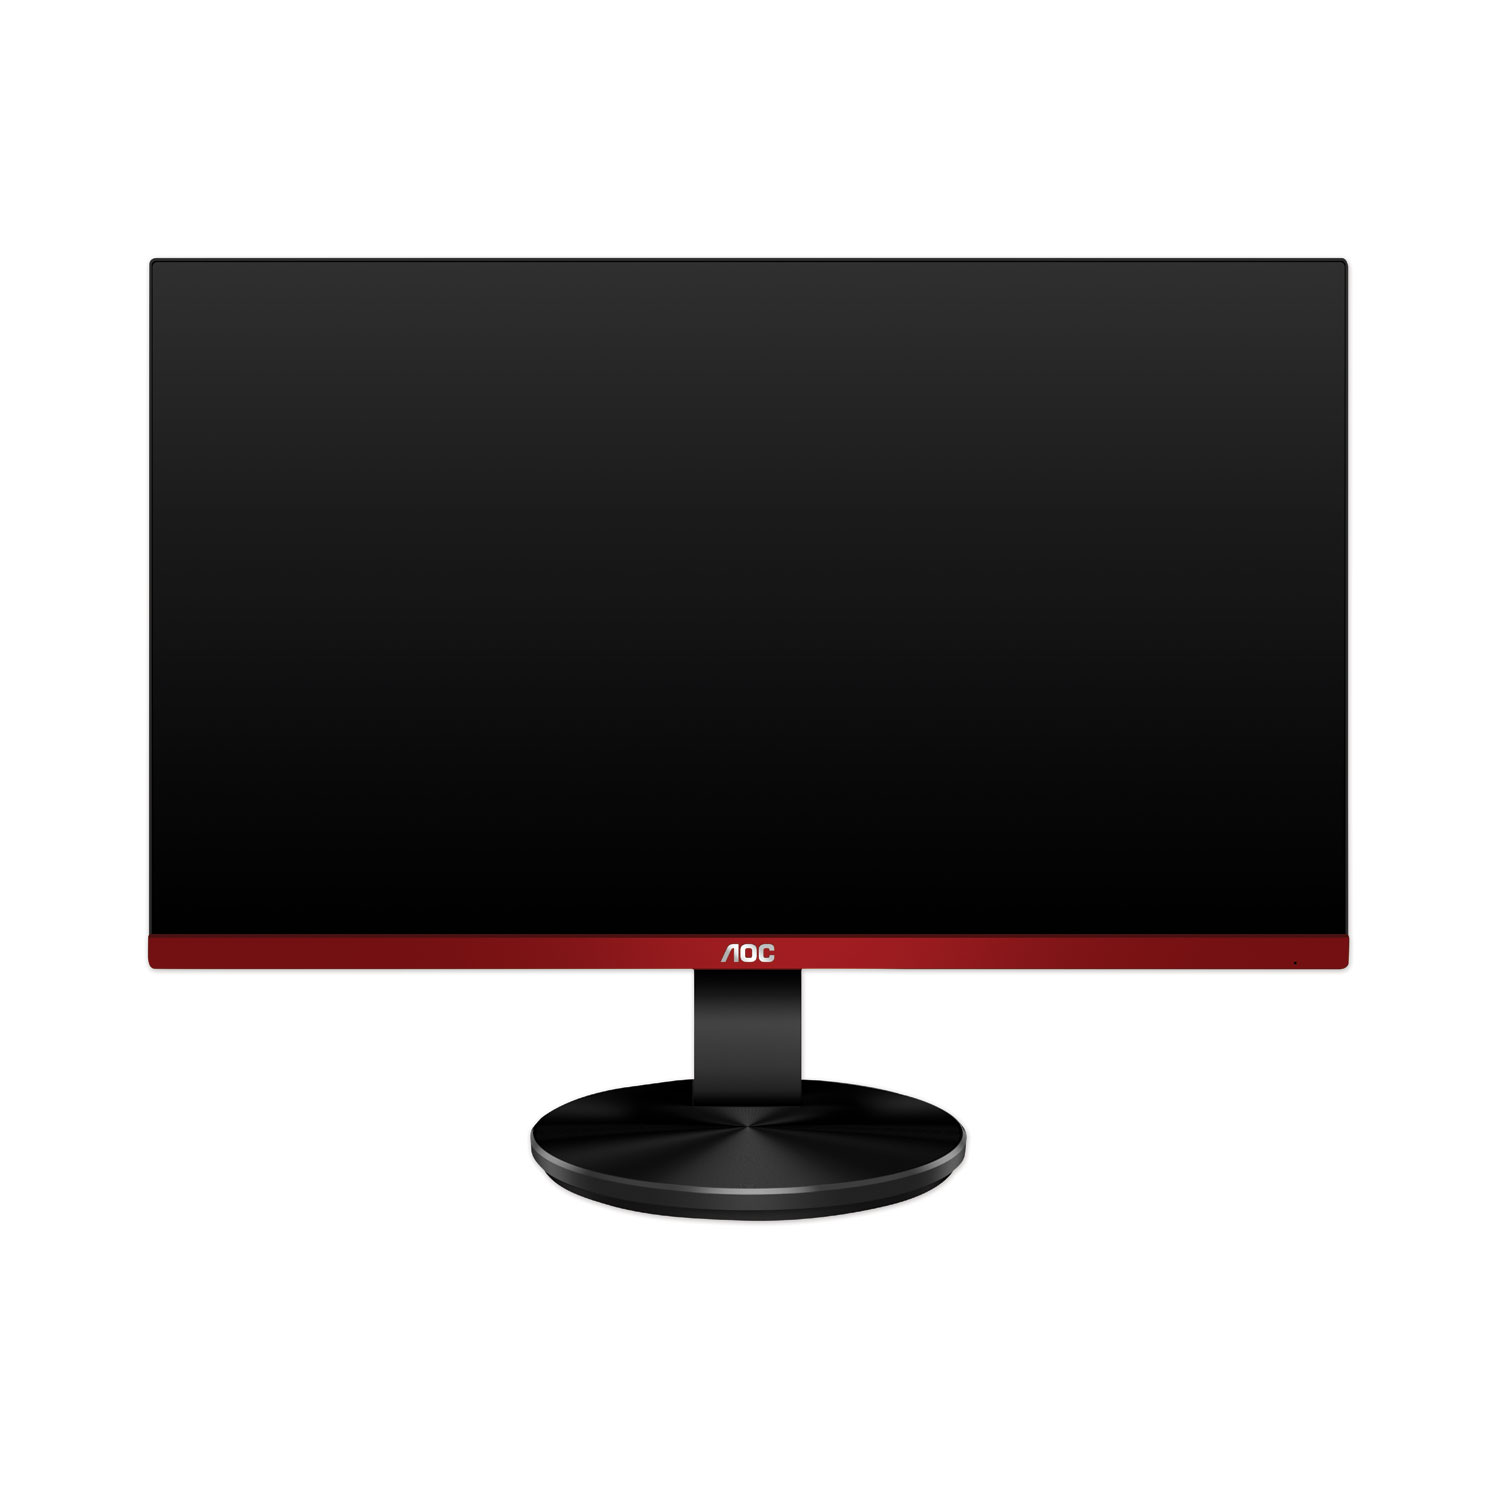  AOC G2590FX G2590FX WLED Monitor, 24.5 Widescreen, 16:9 Aspect Ratio (AOCG2590FX) 